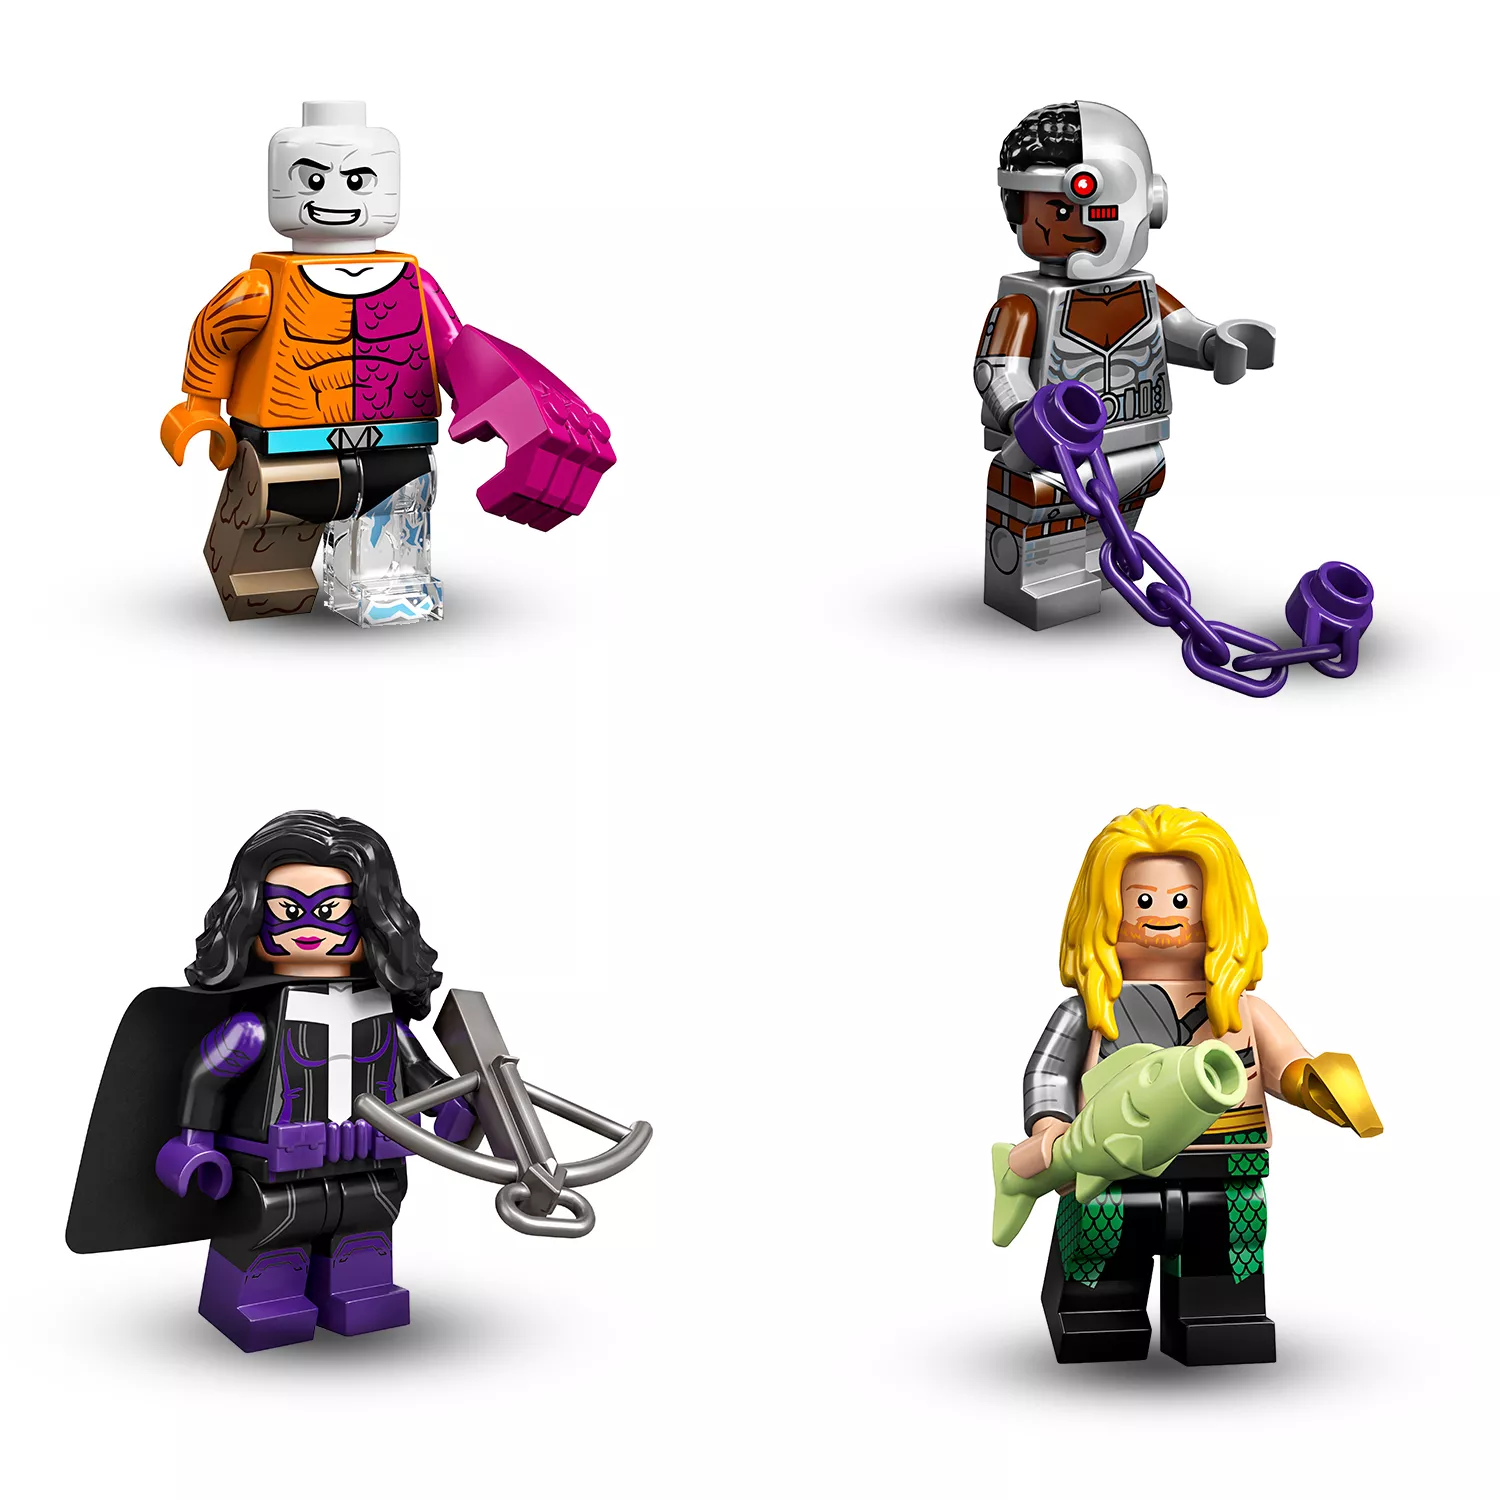 LEGO Minifigures DC Super Heroes Series